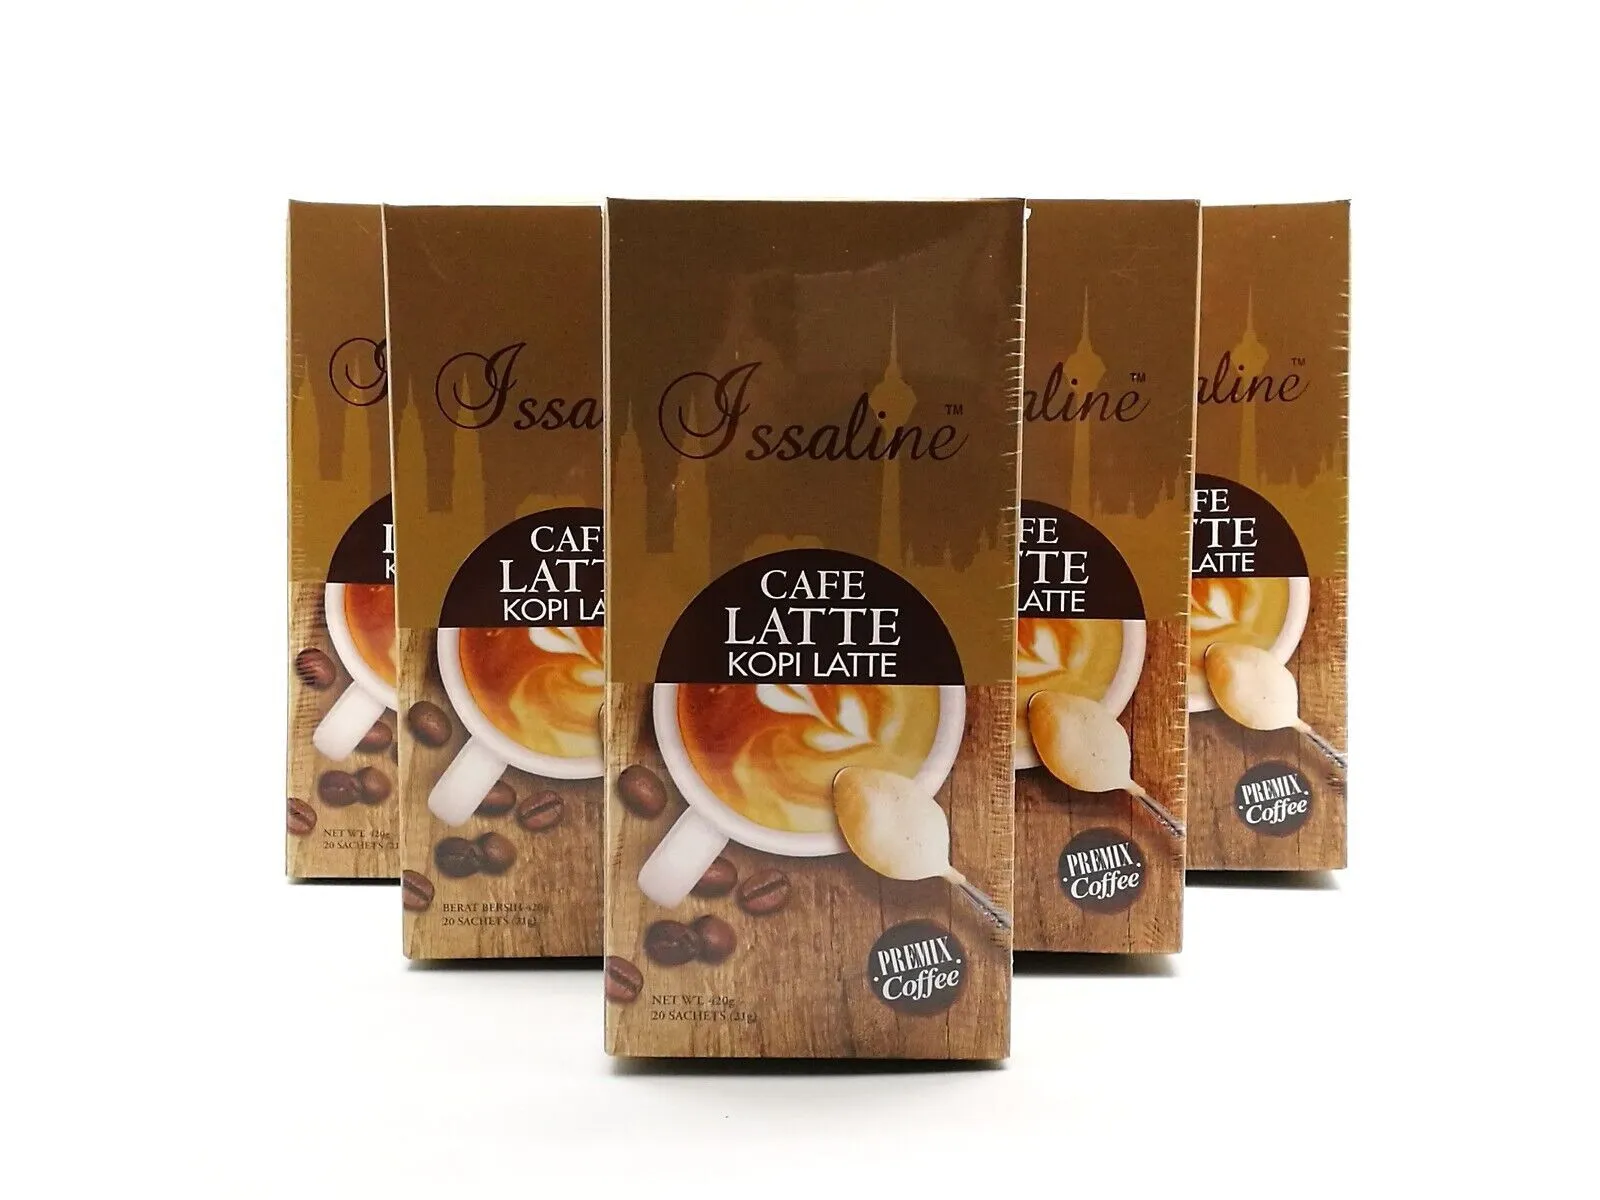 6 Boxes X Issaline Gourmet Cafe Latte 100% Ganoderma Lucidum Extract Cof... - $199.00